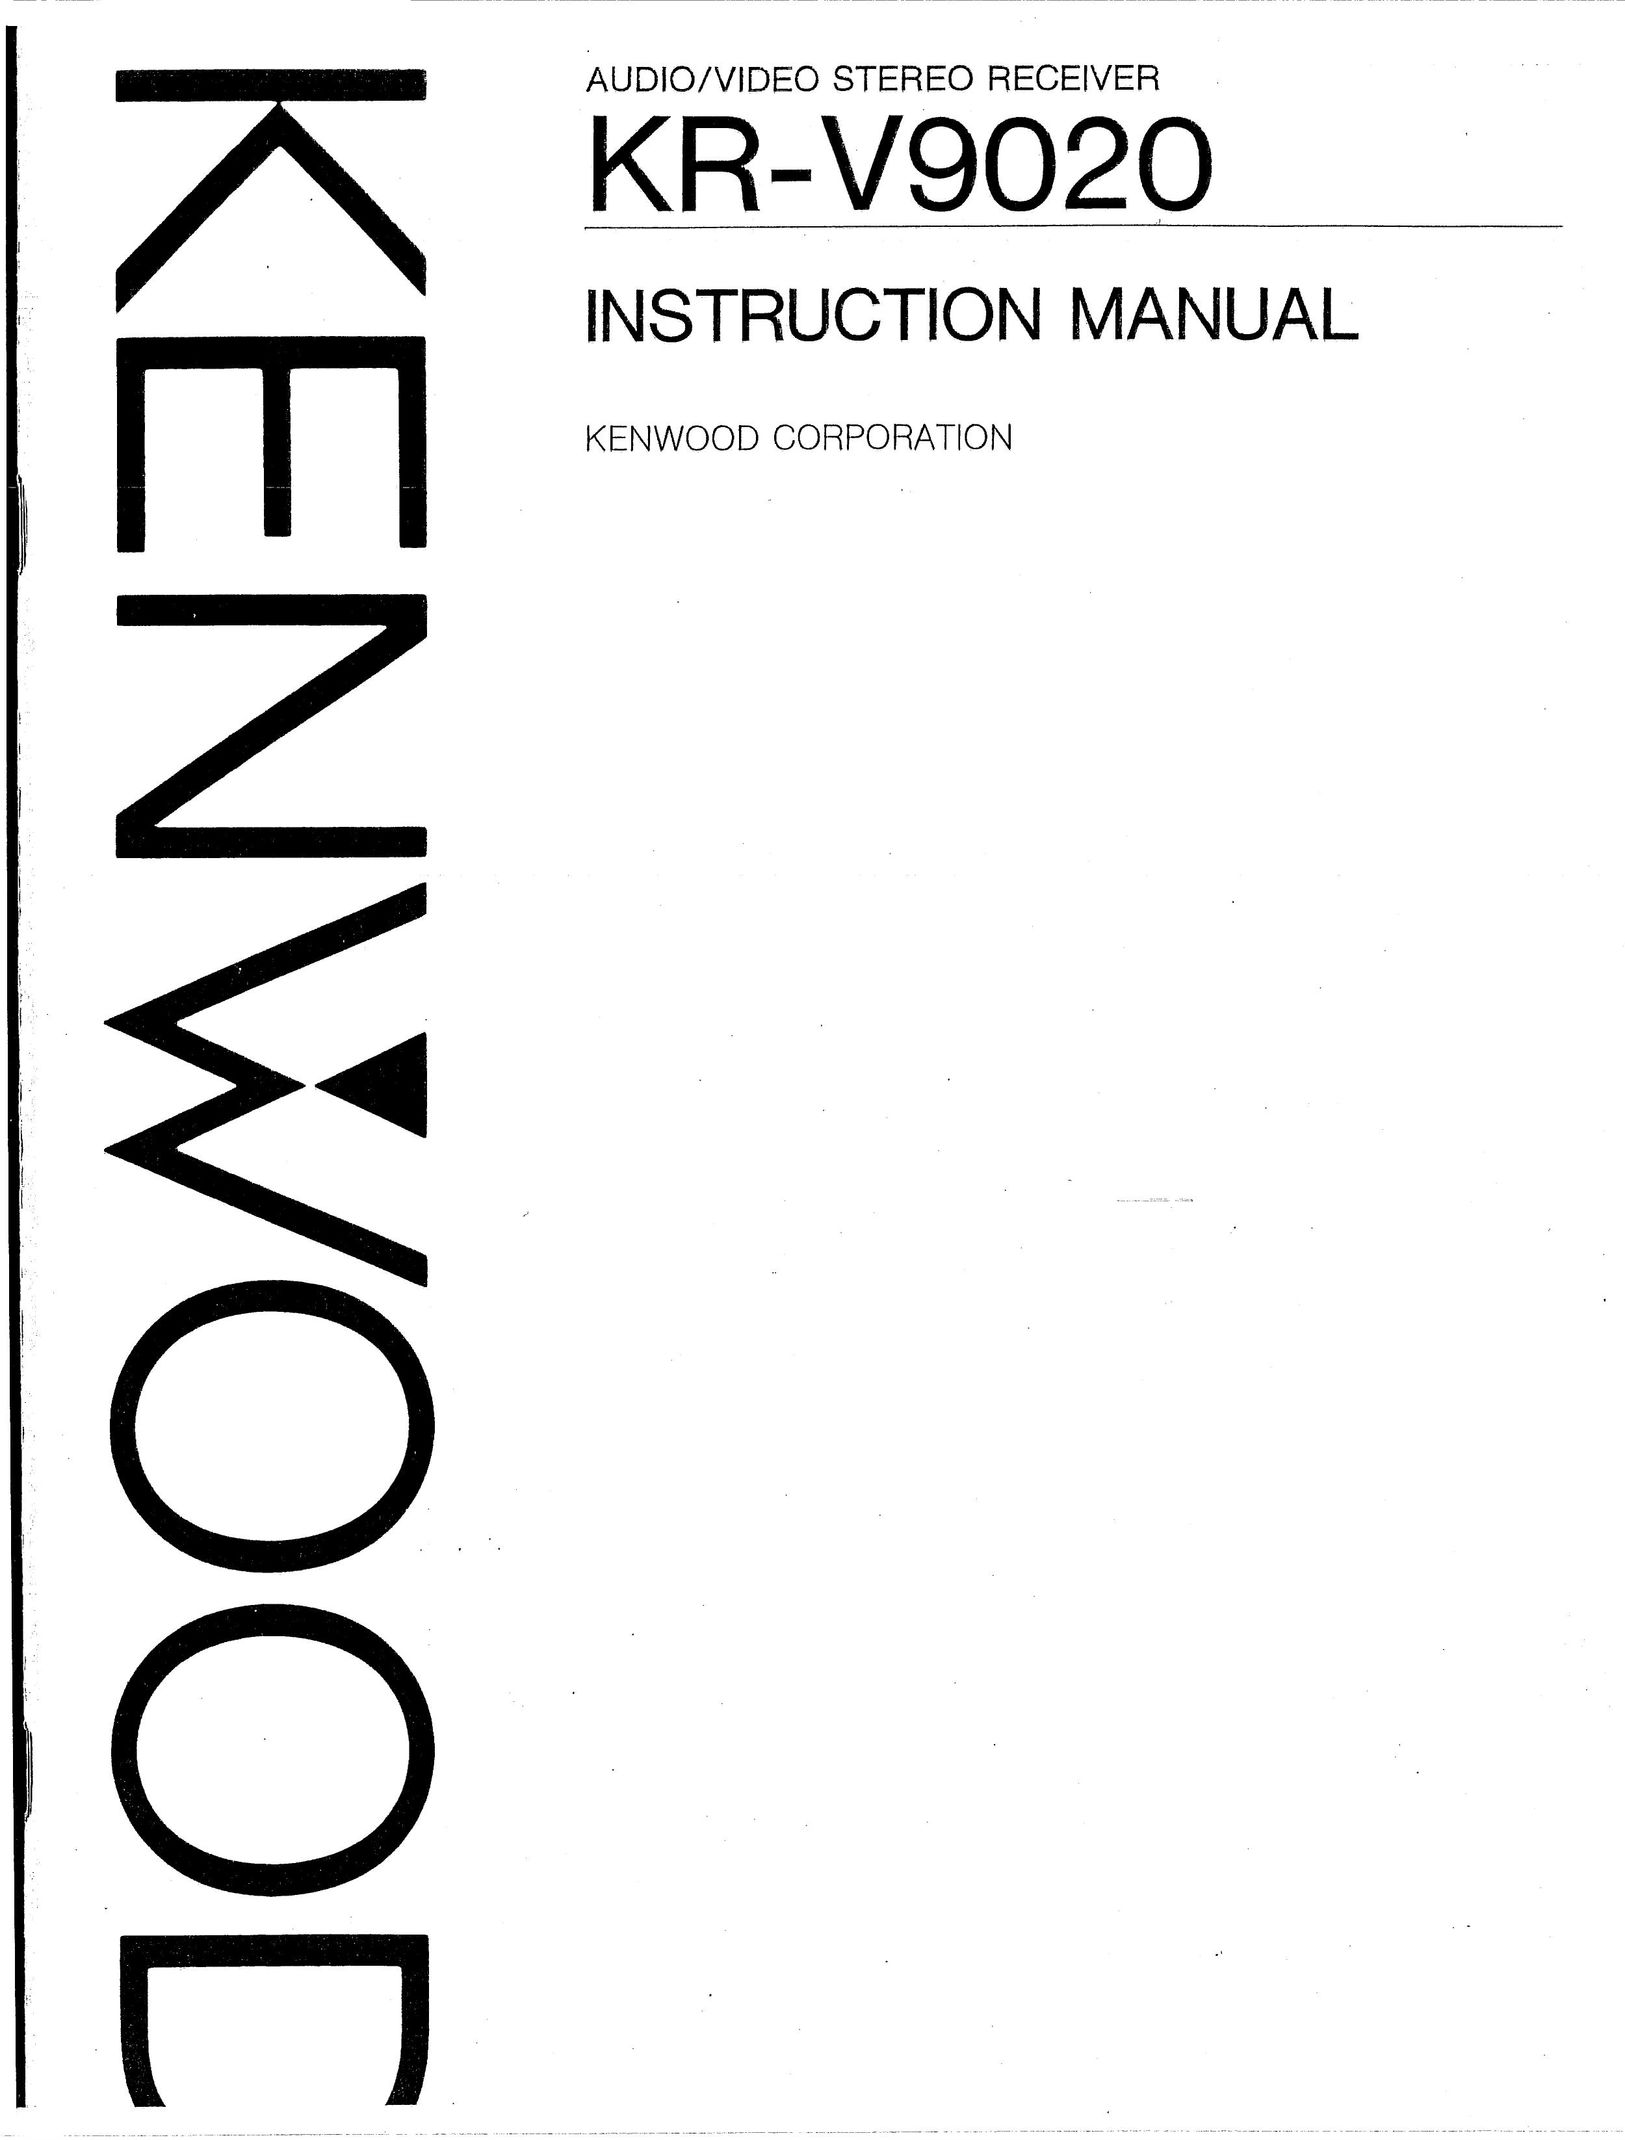 Kenwood KR-V9020 DVR User Manual